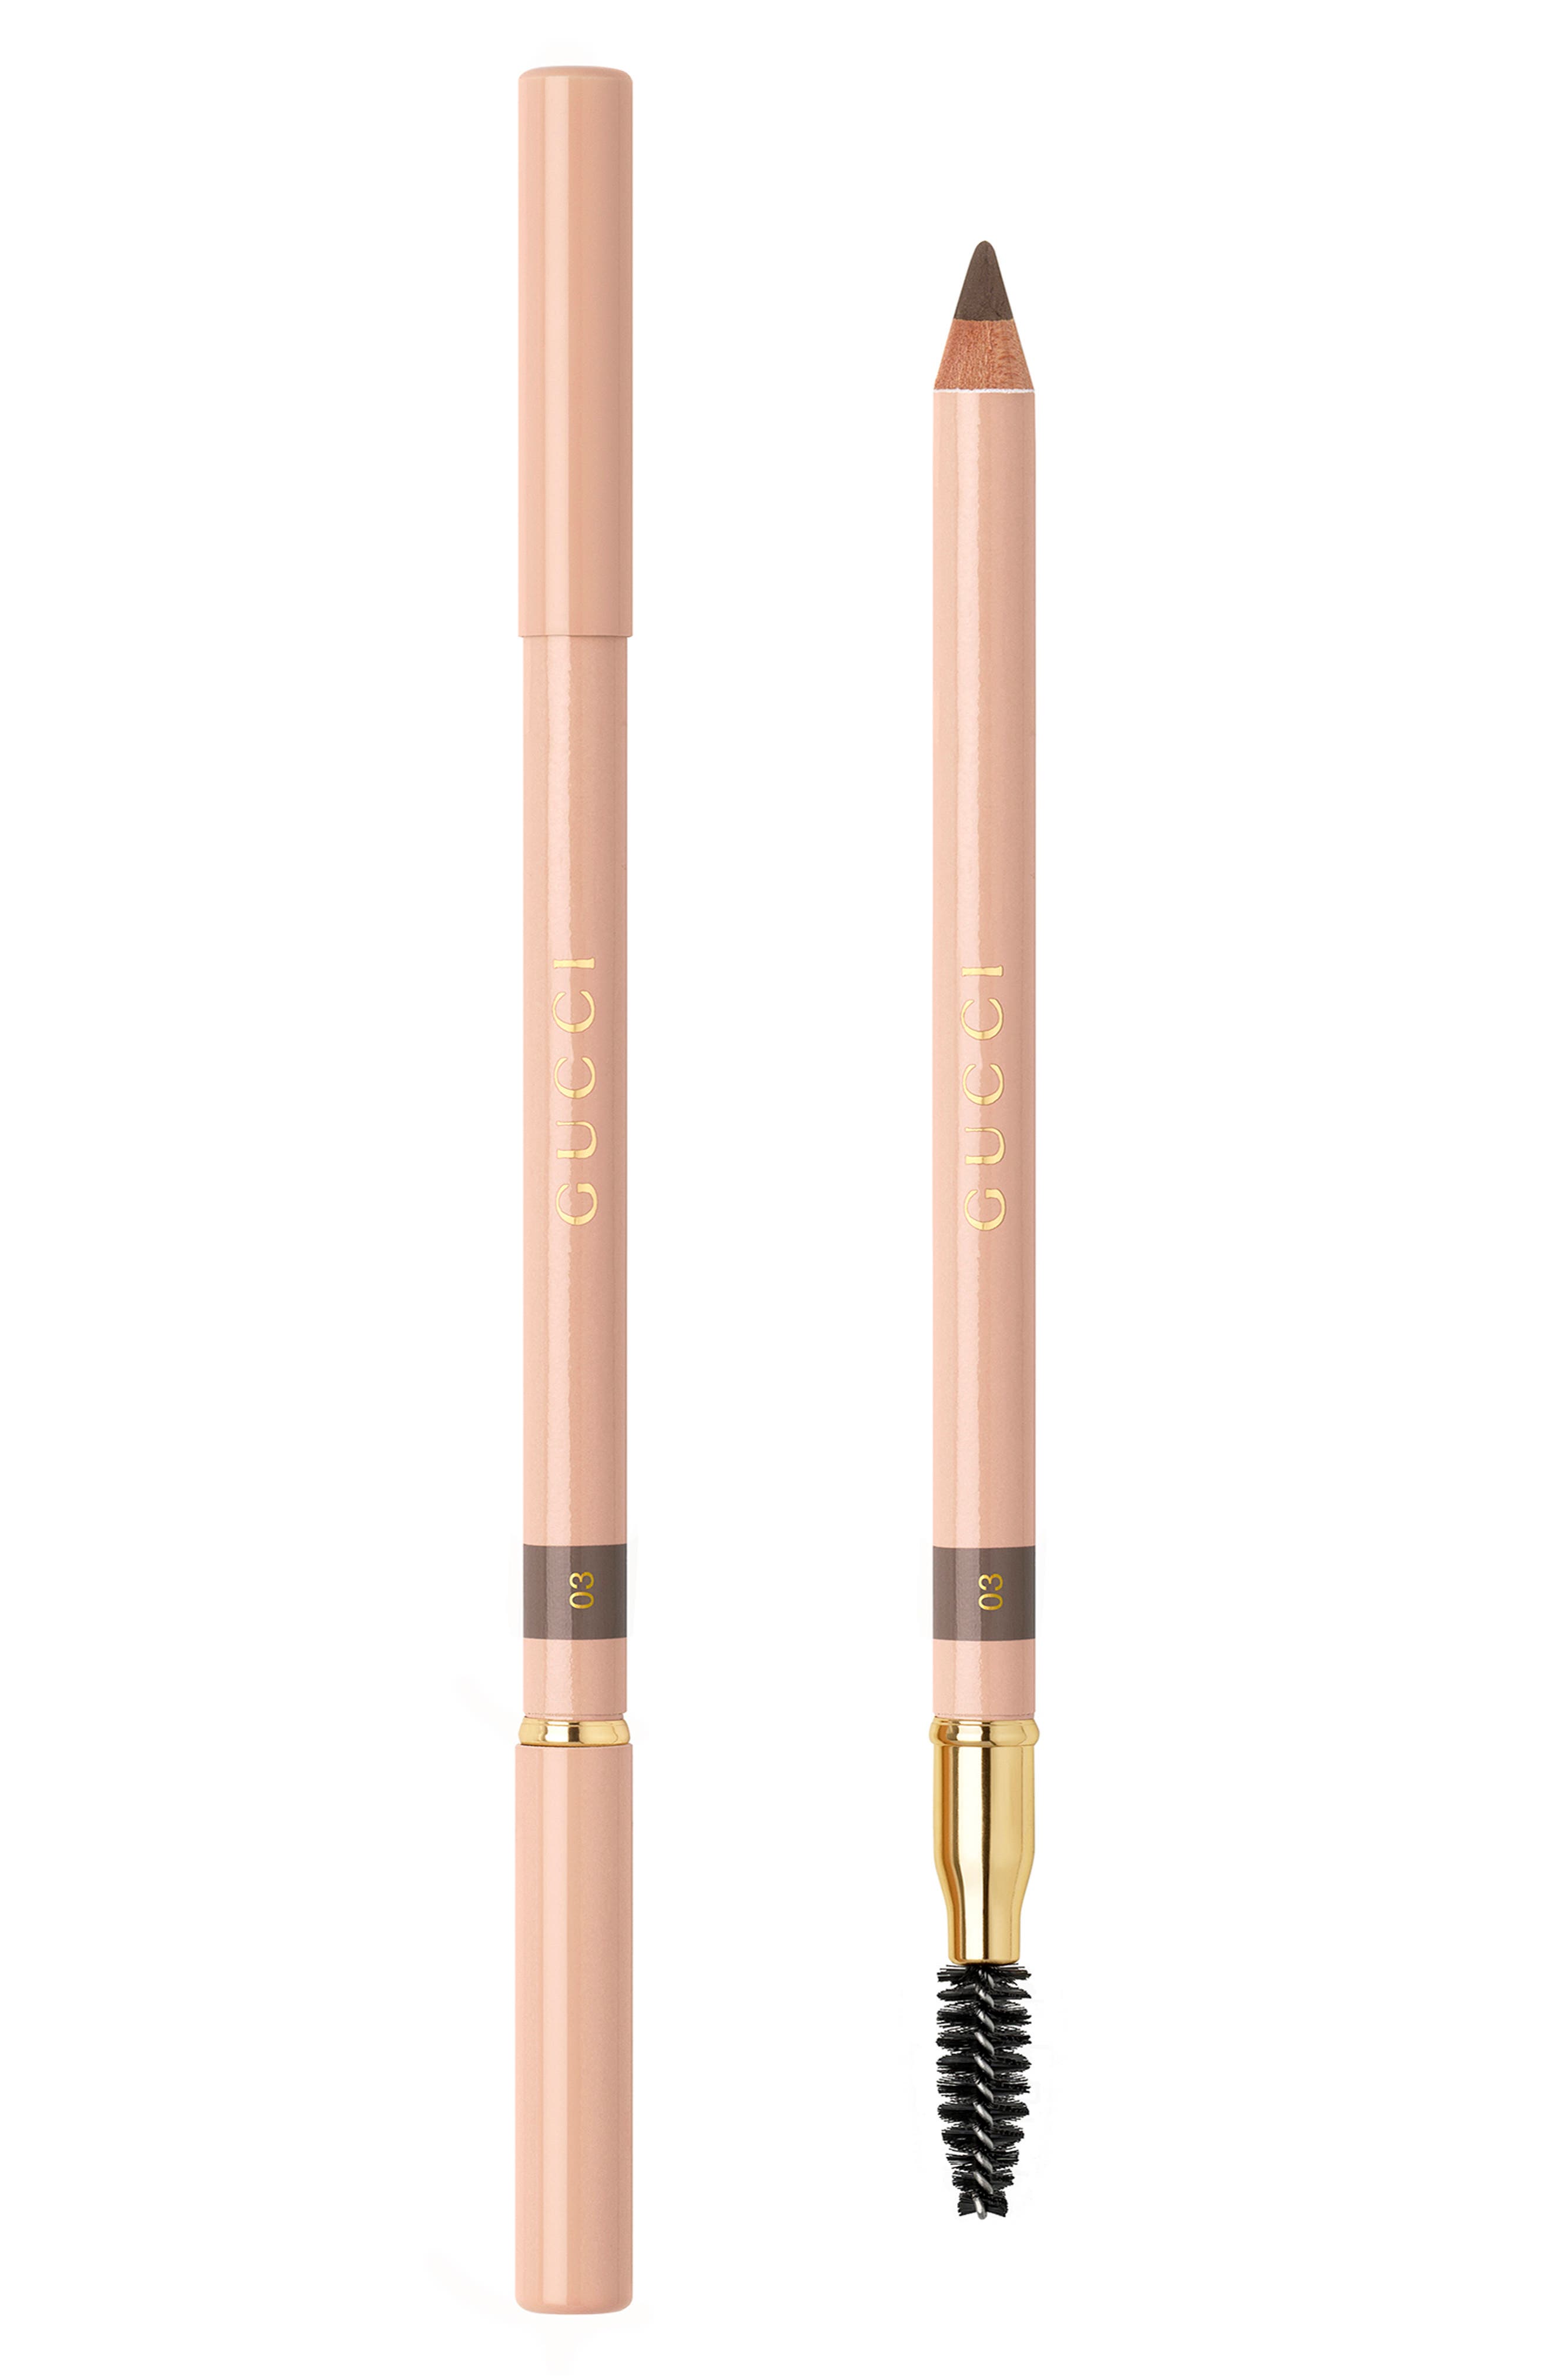 Gucci Crayon Definition Sourcils Powder Eyebrow Pencil in Light Brown at Nordstrom